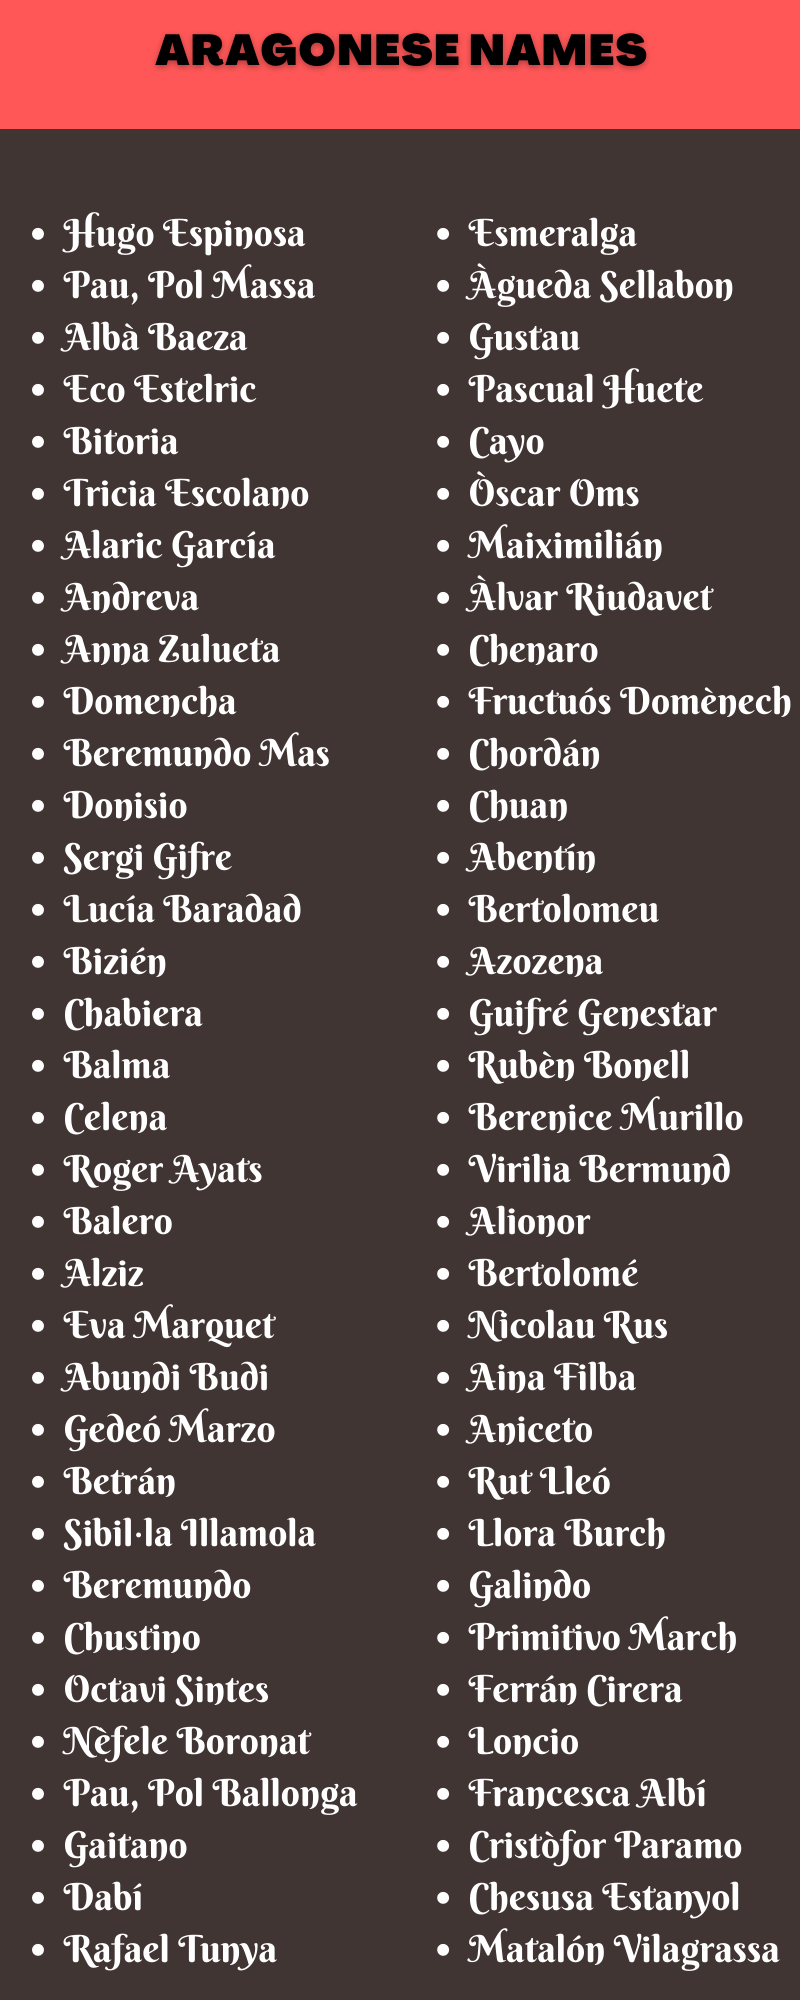 Aragonese Names